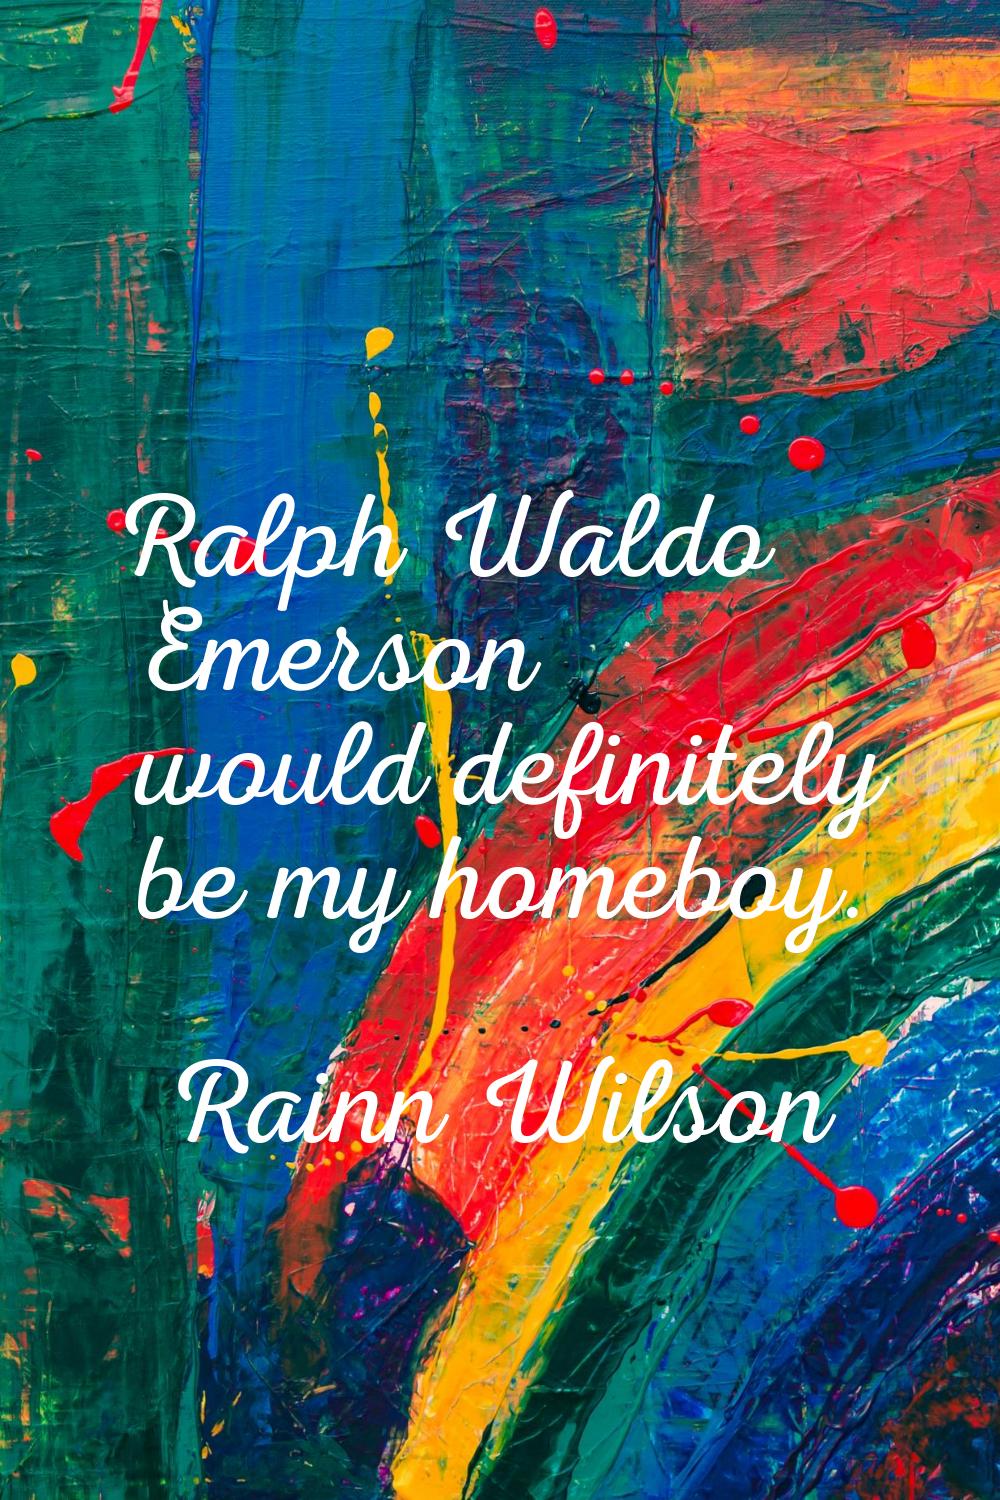 Ralph Waldo Emerson would definitely be my homeboy.